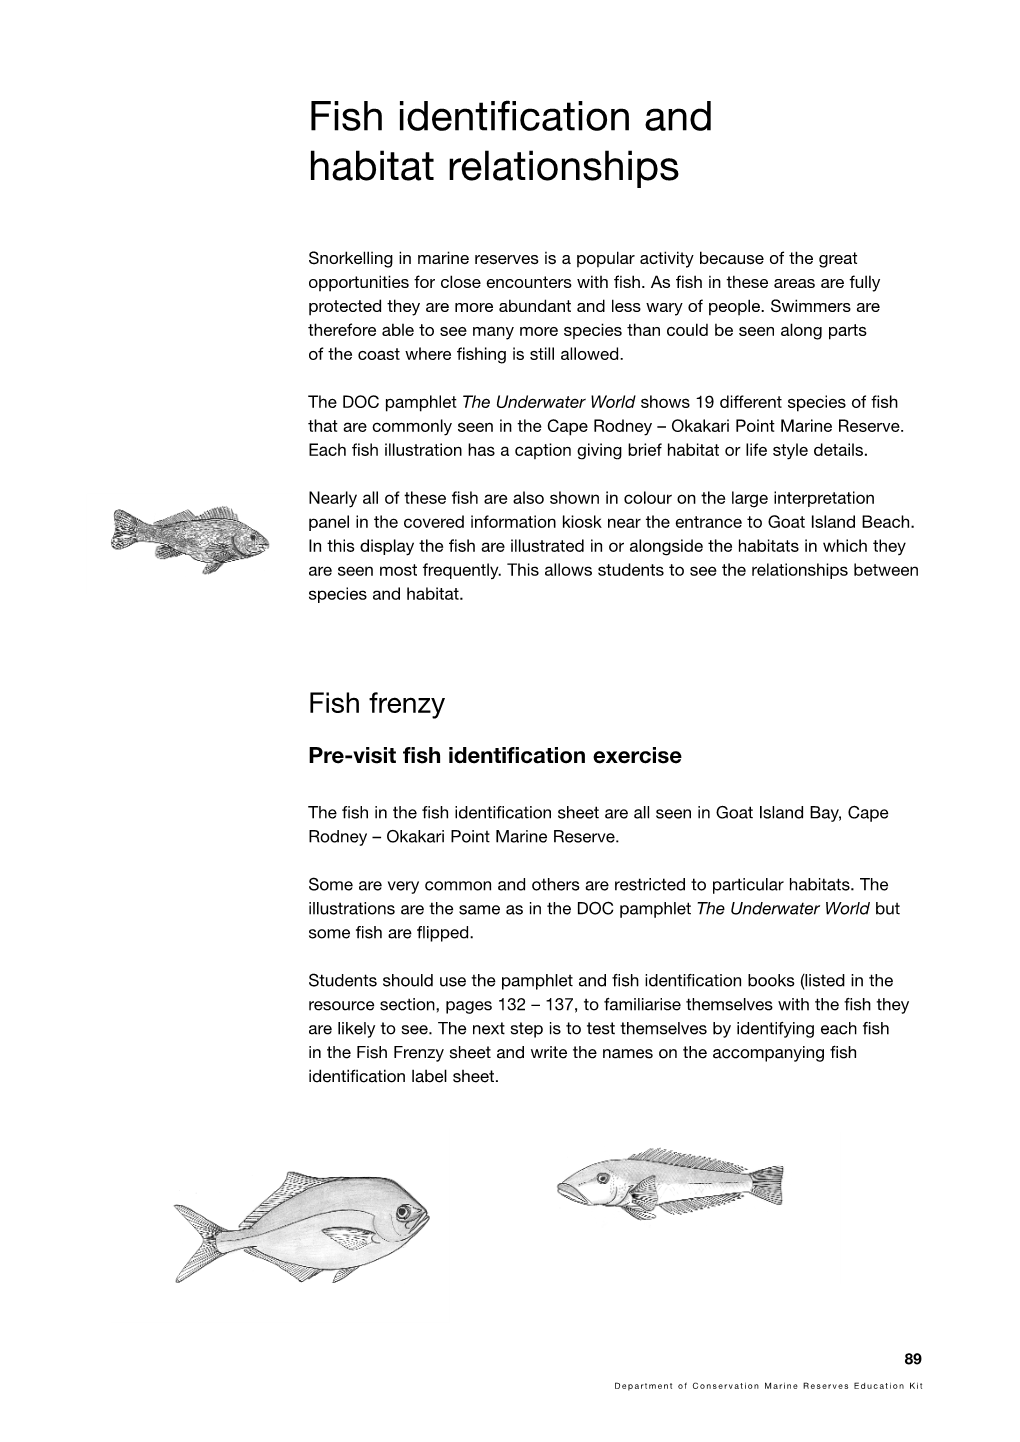 Fish Identification and Habitat Relationships